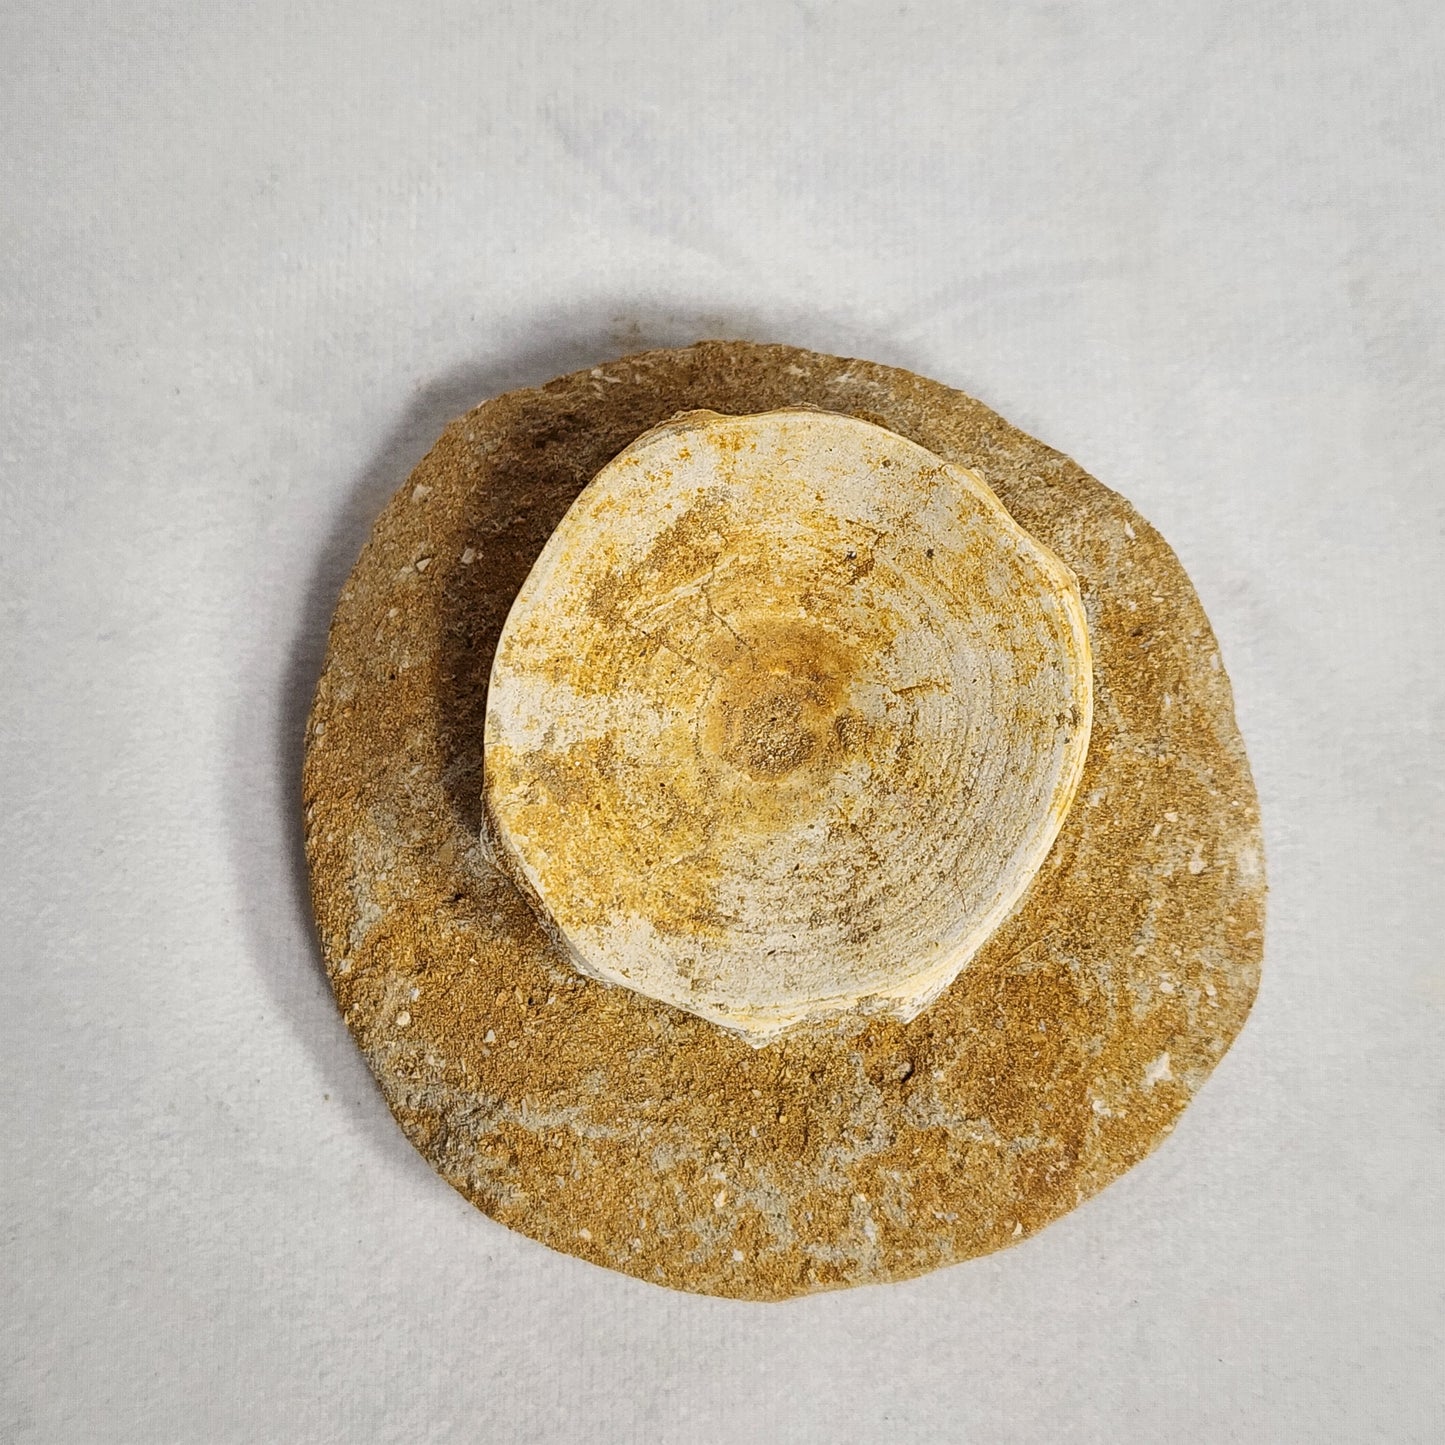 Fossilized Vertebrae from Morocco